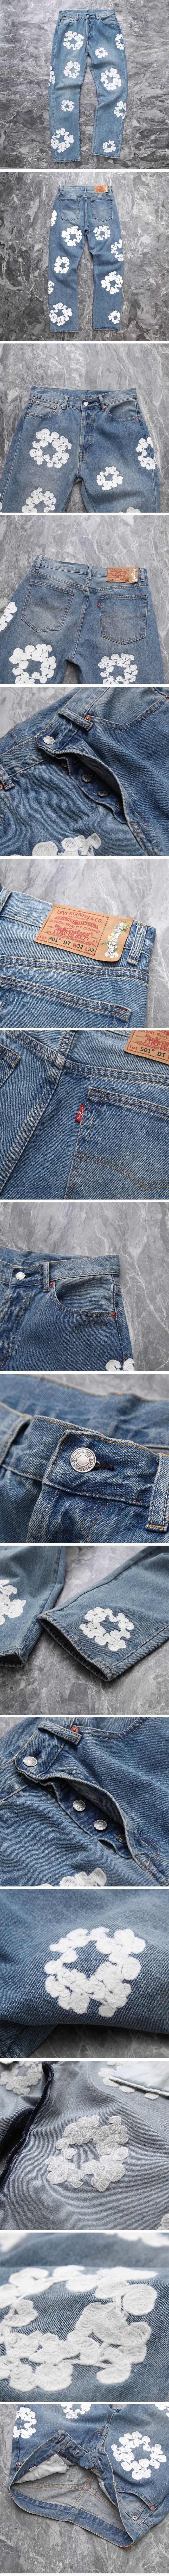 Denim Tears x Levi's 501 Cotton Reese Jeans Light Wash デニムティアーズ × リーバイス コットン・リースジーンズ ライトウォッシュ【※刺繍リース】